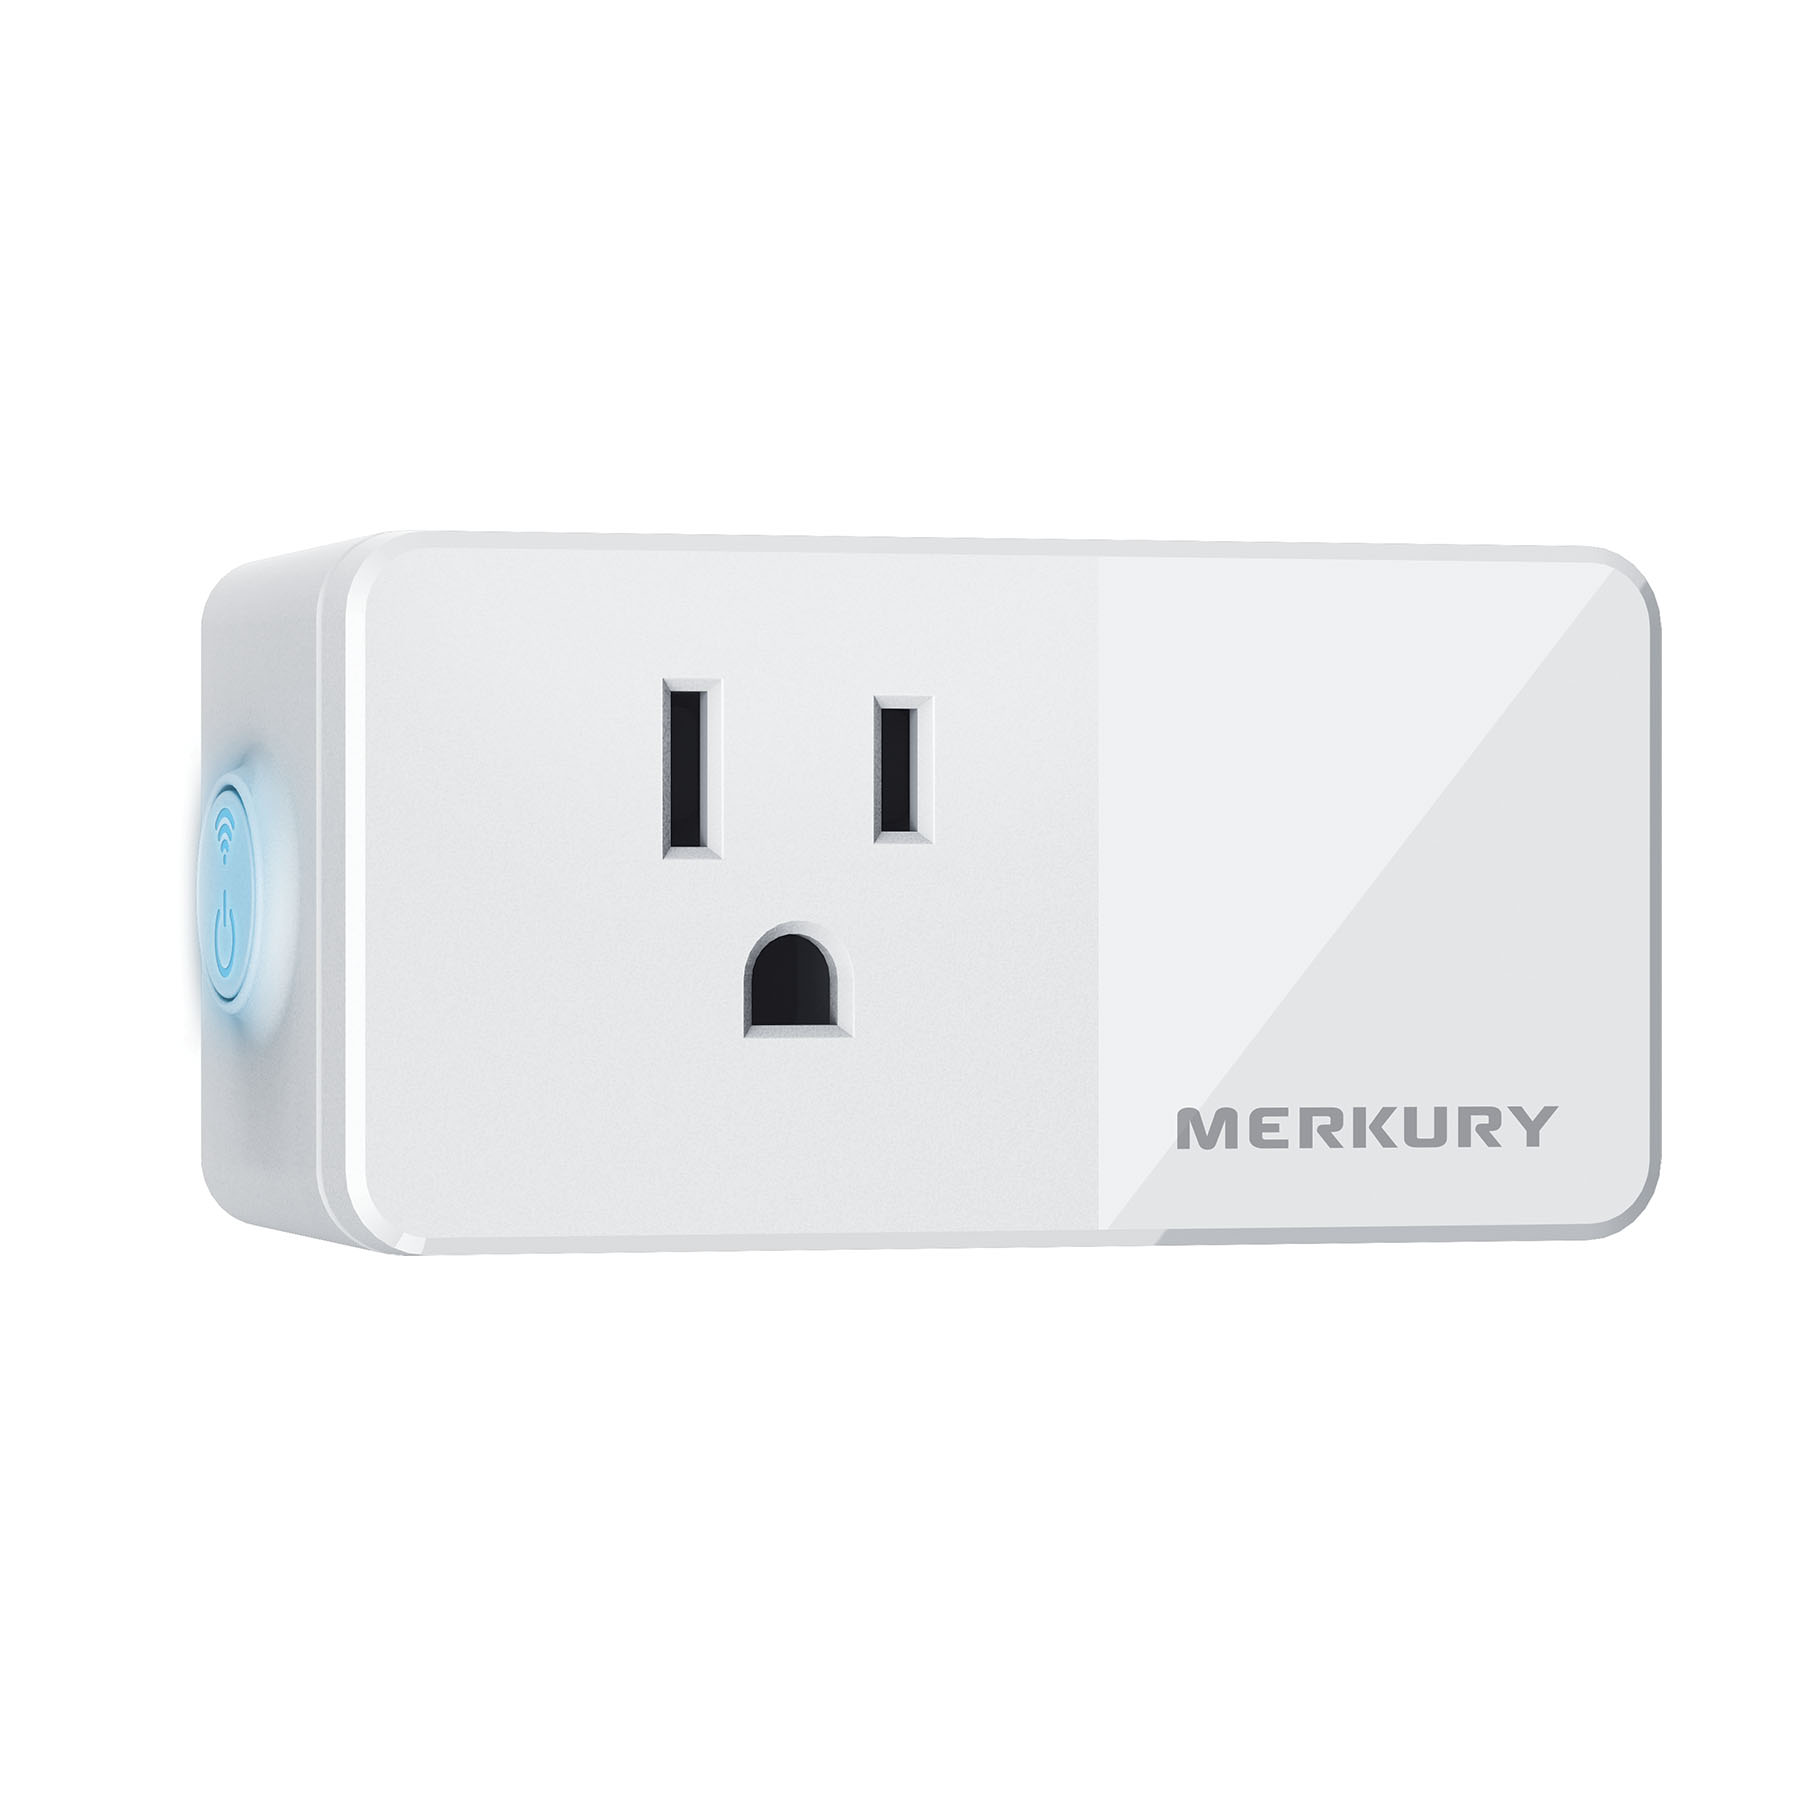 Merkury Innovations Smart Plug, 1-Pack Outlets - image 1 of 5